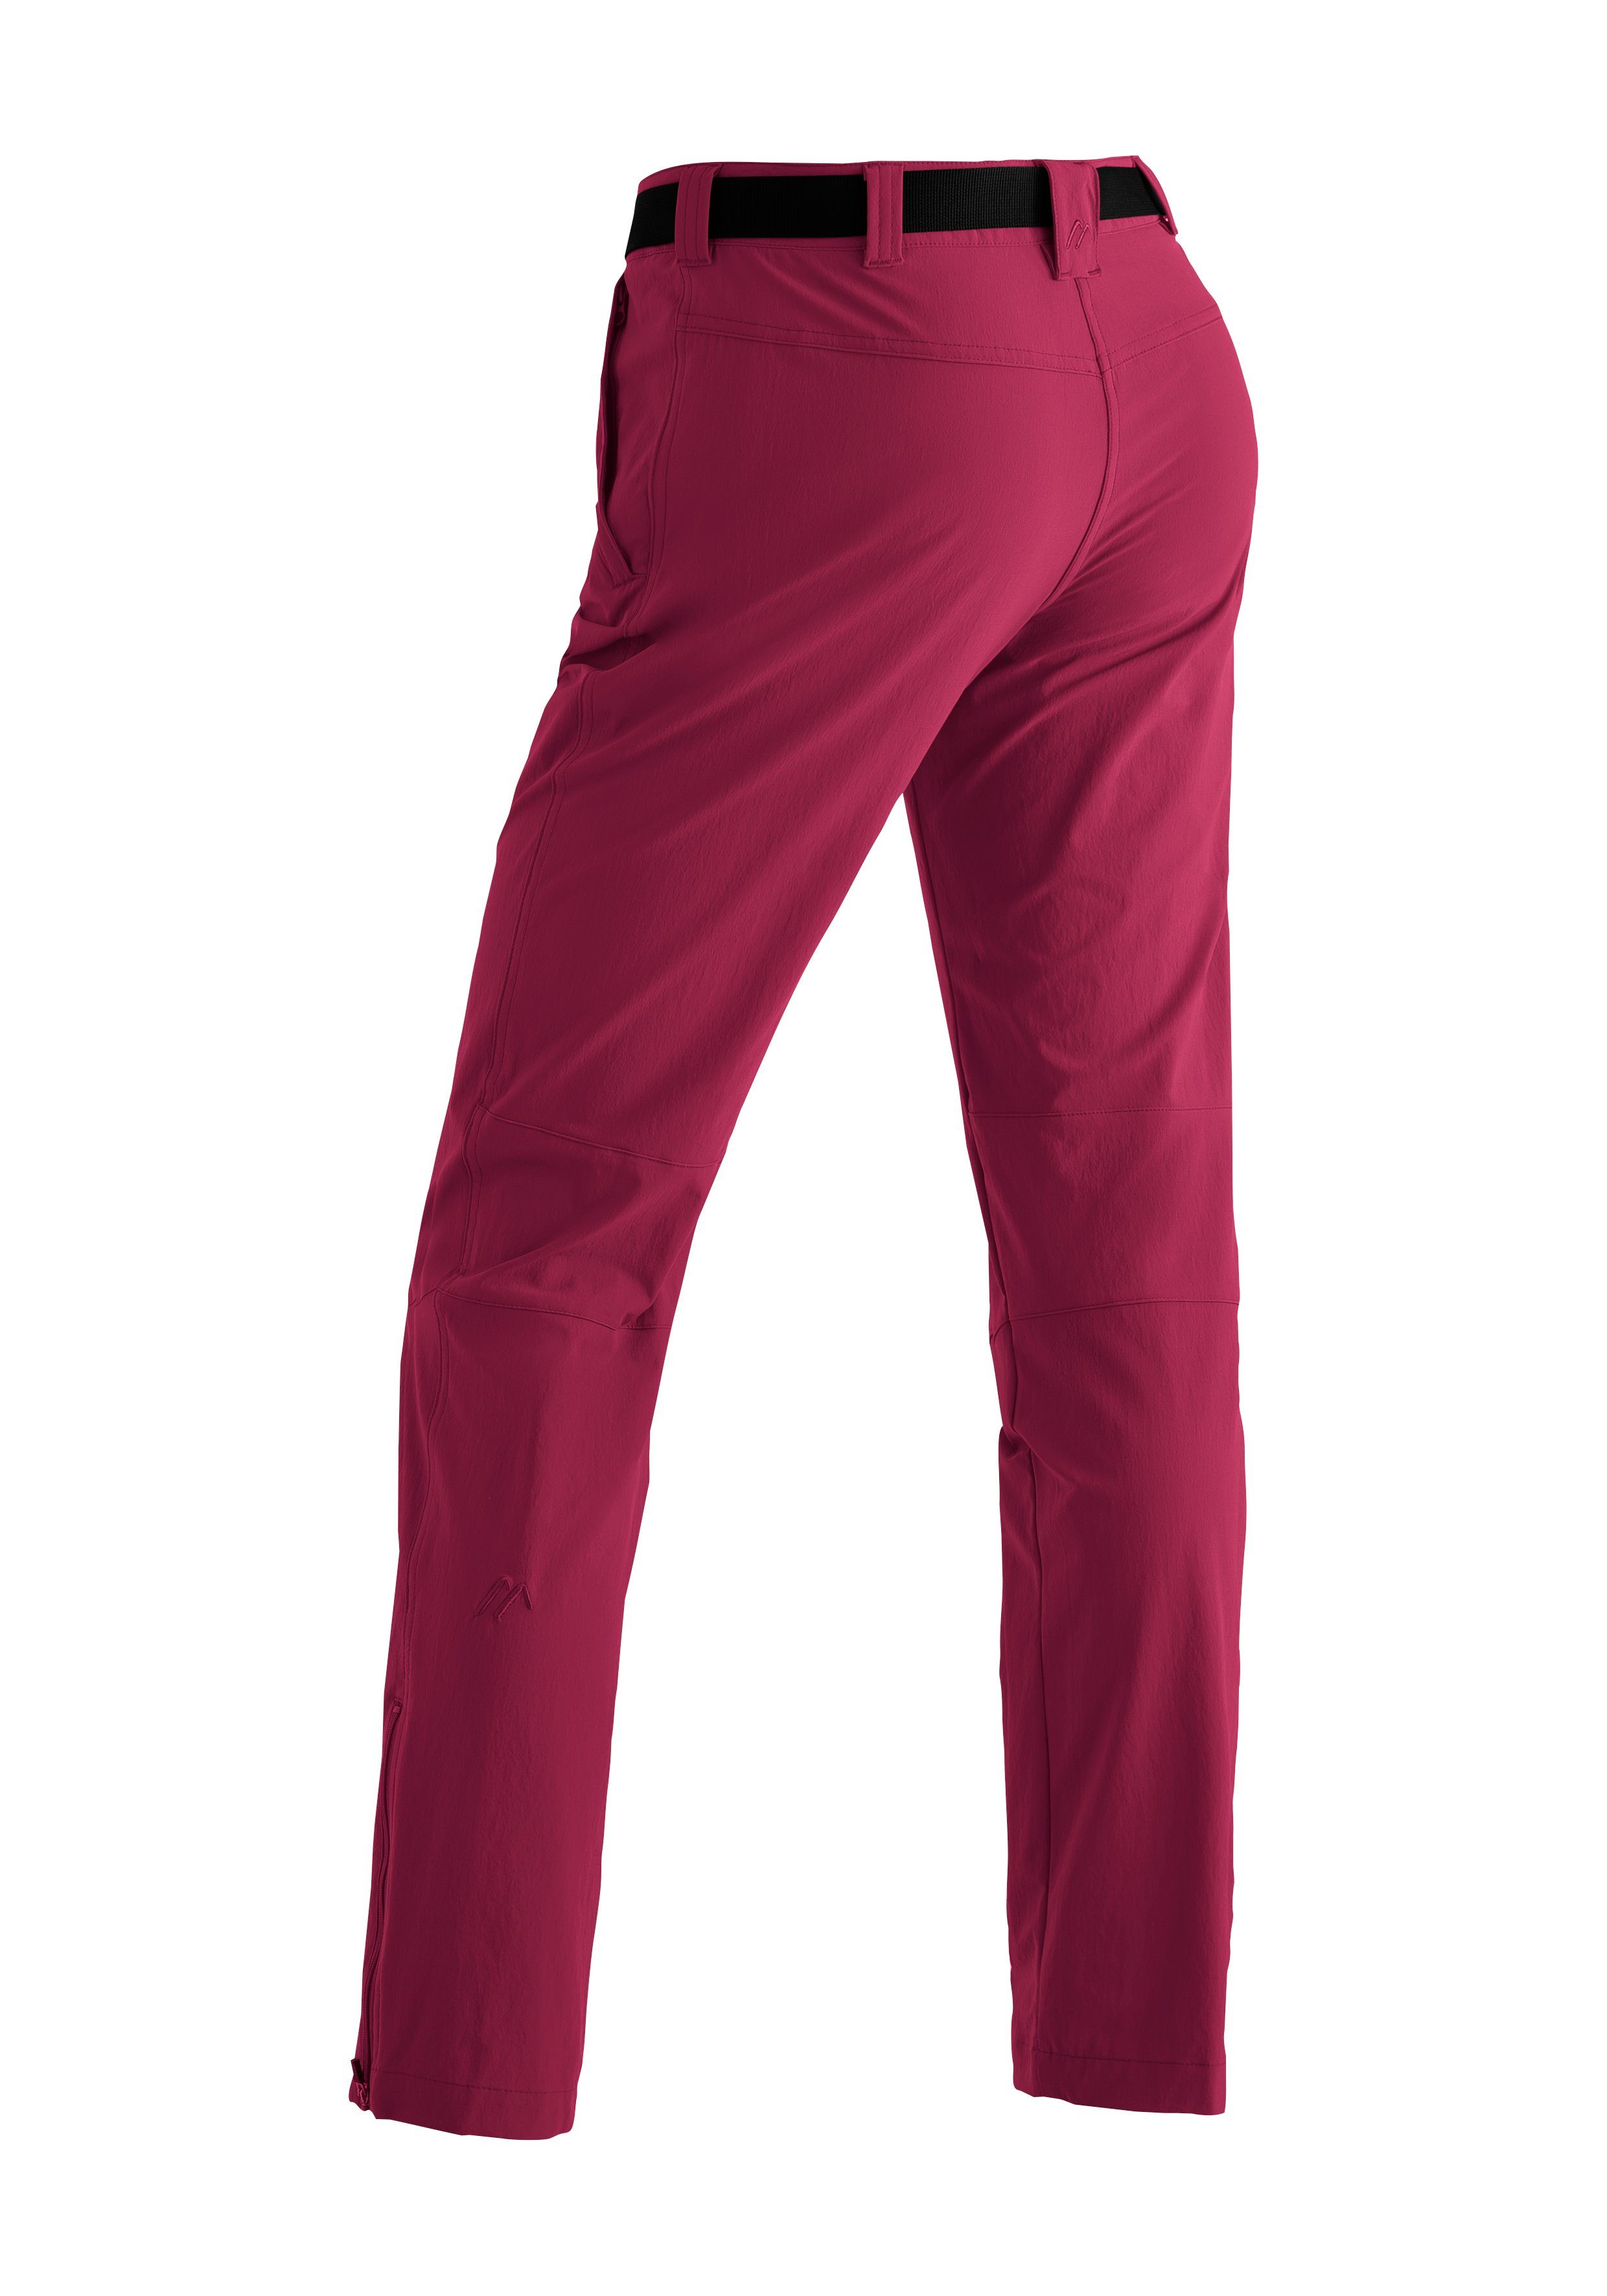 Inara purpurrot Funktionshose Sports aus Maier elastischem Wanderhose, Damen Material slim Outdoor-Hose